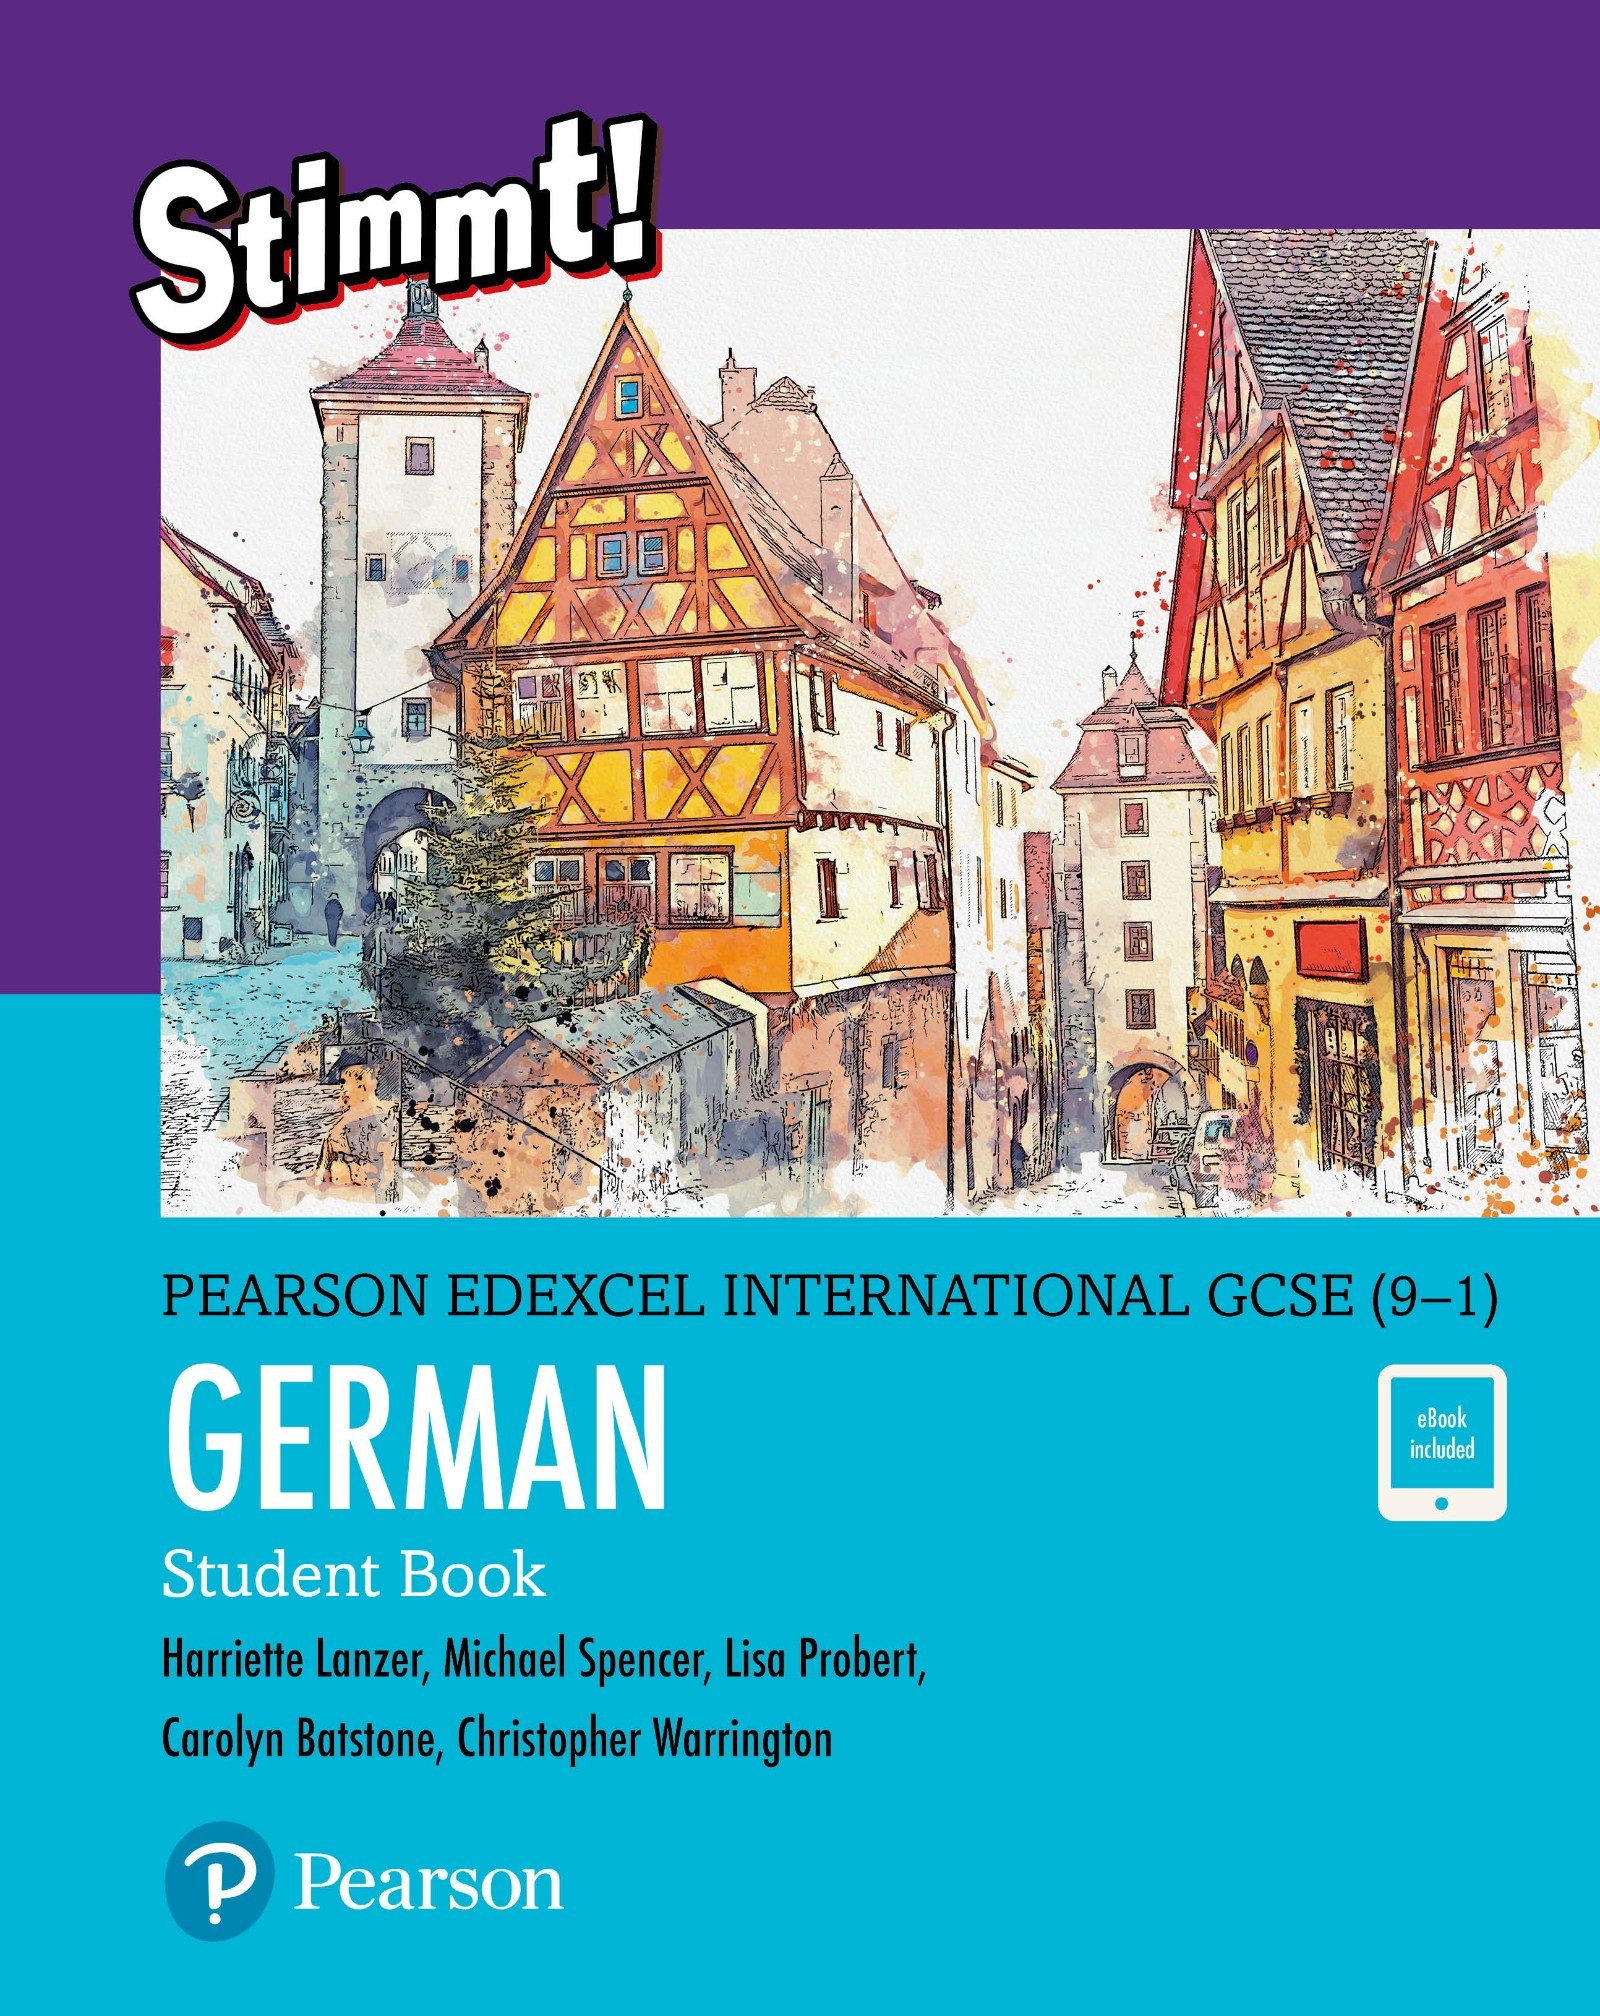 Featured image for “Pearson Edexcel International GCSE (9–1) German”